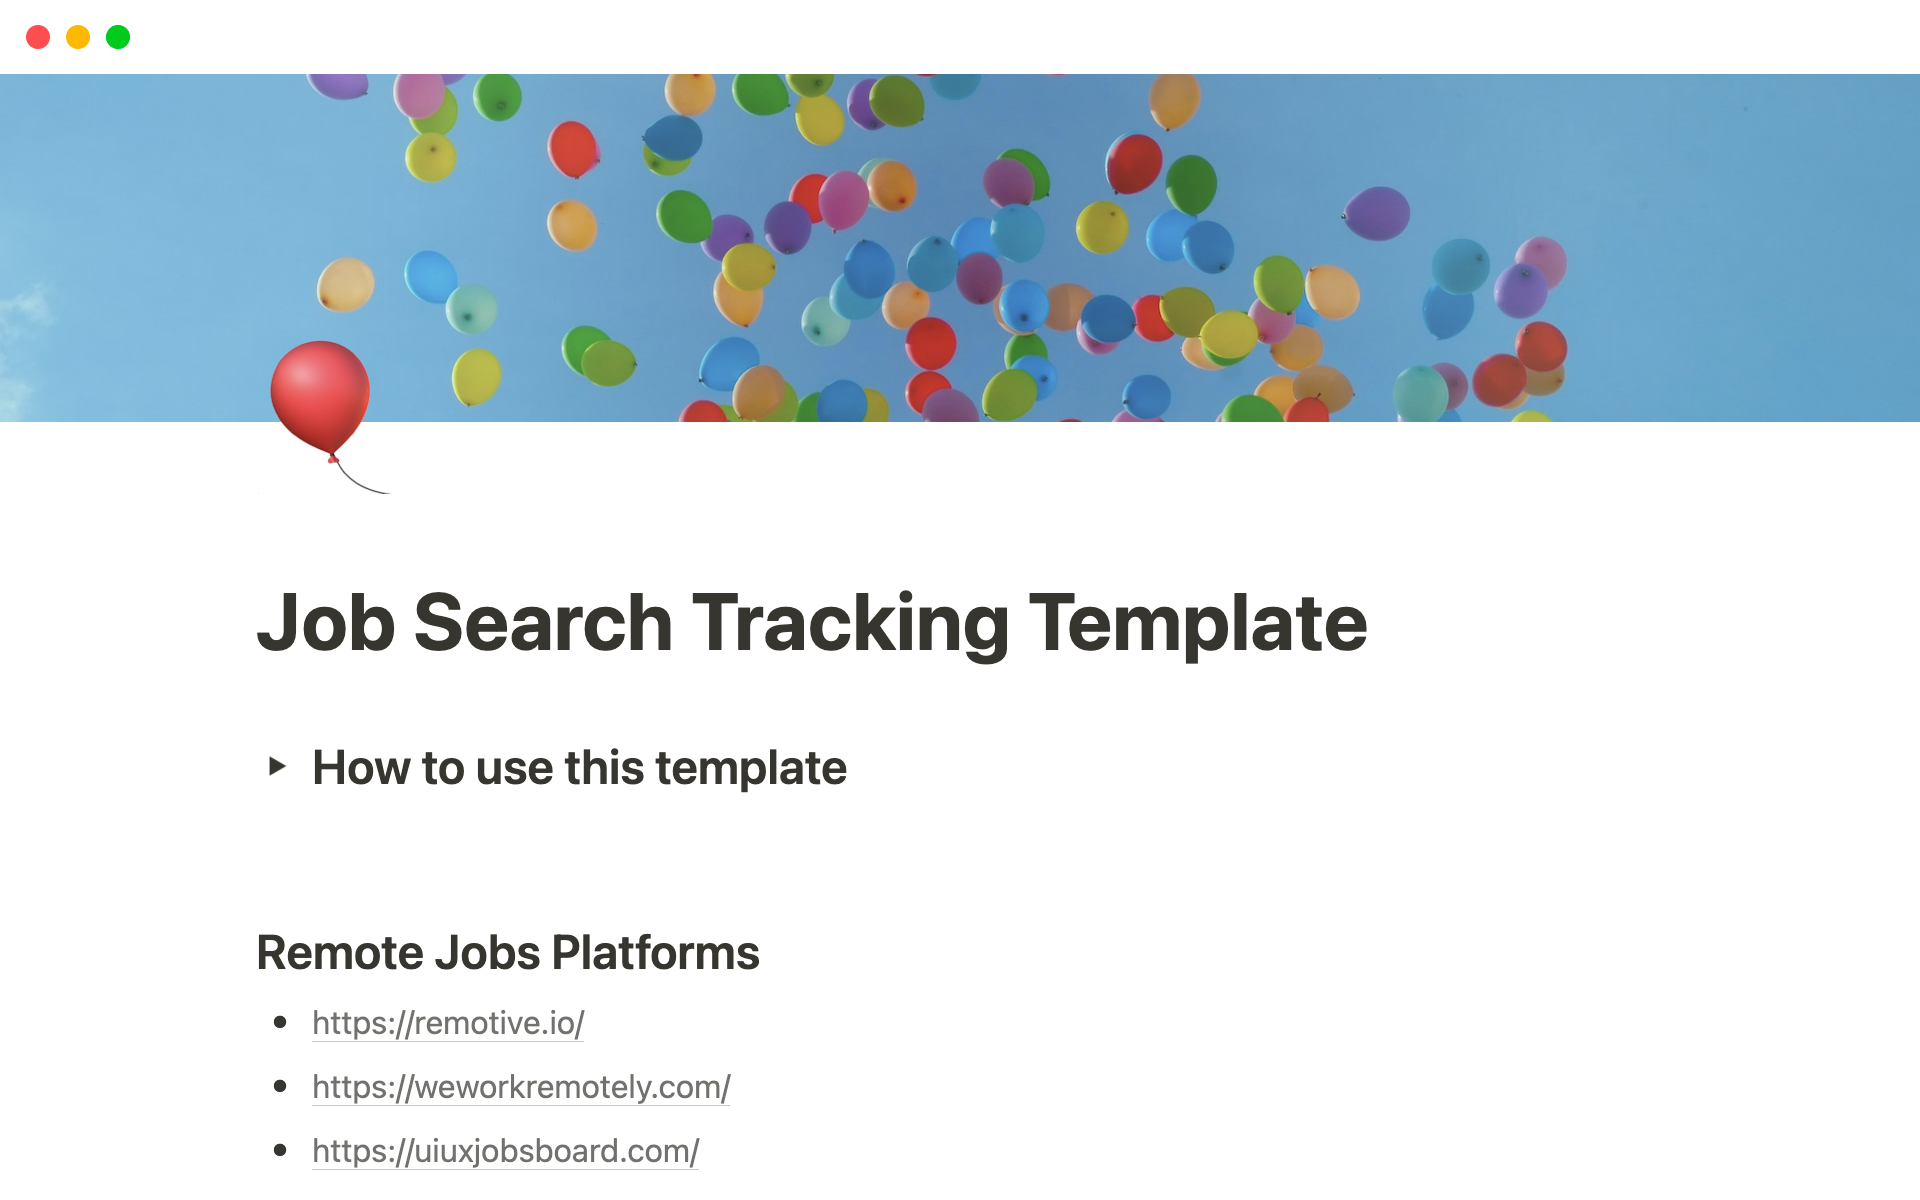 Aperçu du modèle de Job Search Tracking Template